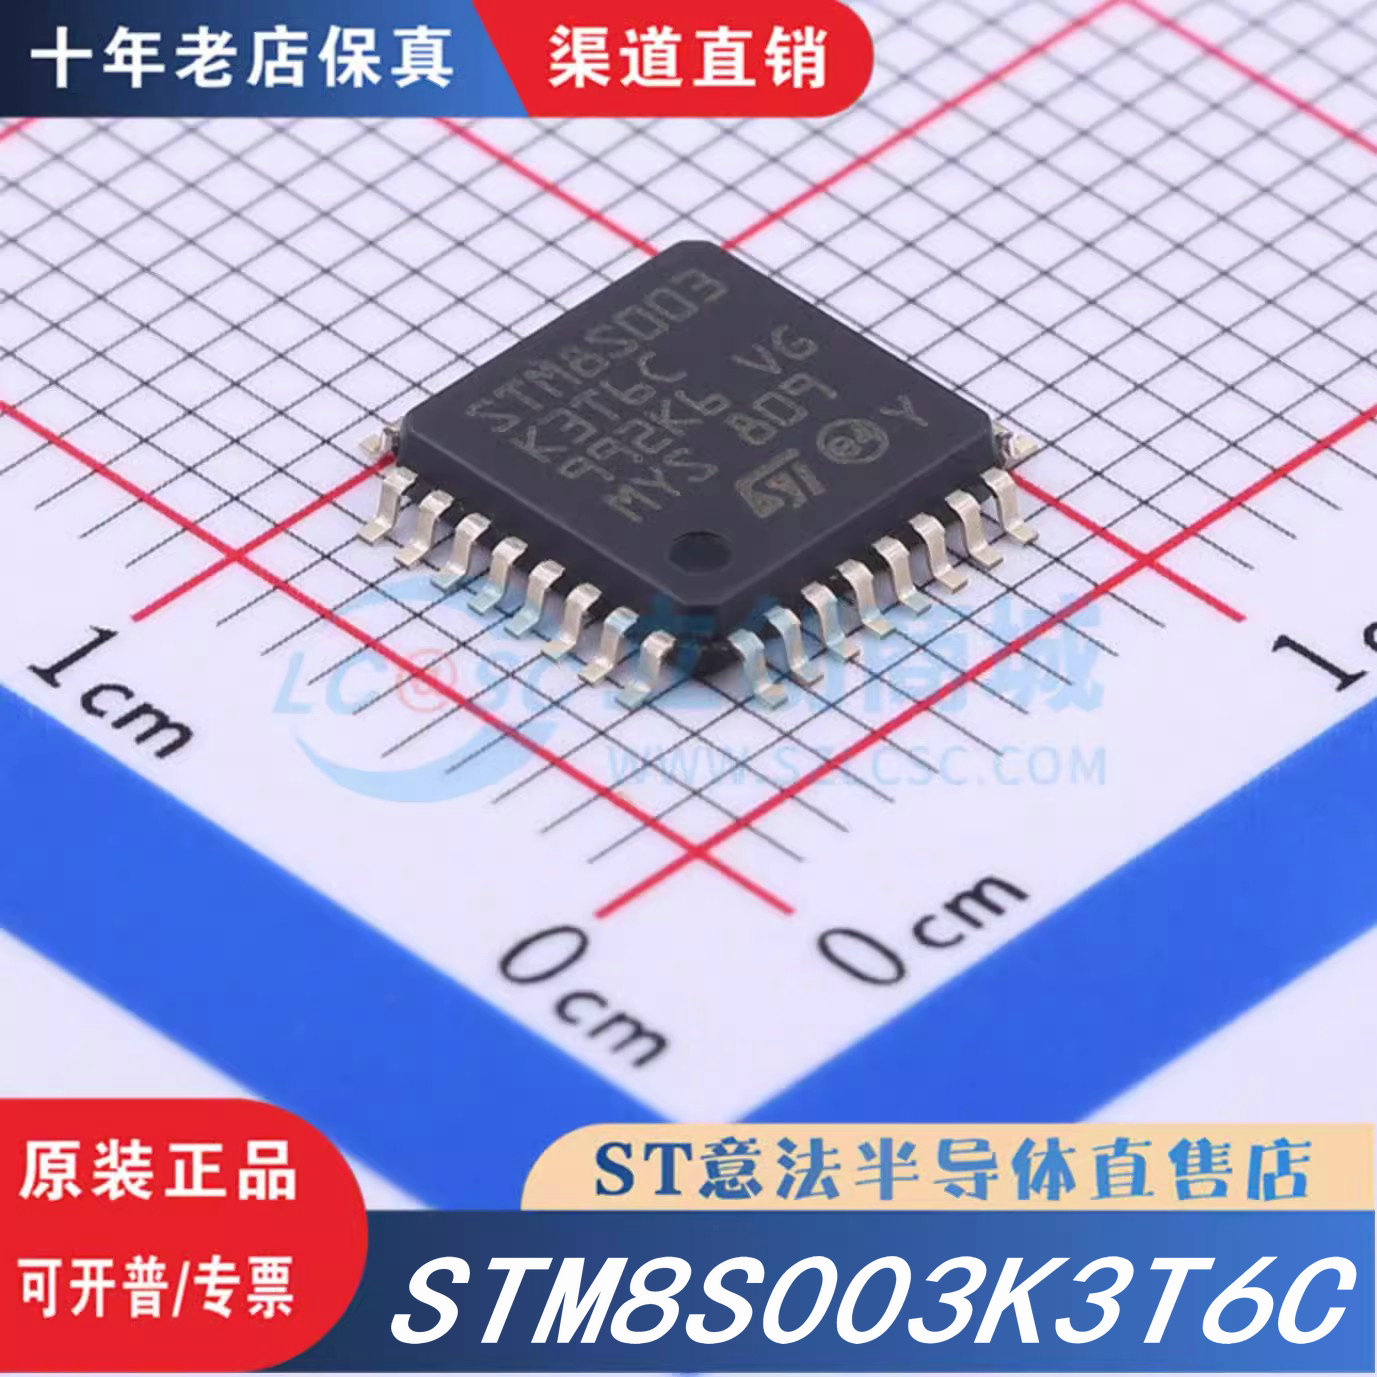 STM8S003K3T6C  LQFP-32   全新原装正品 优势低价 渠道直售现货 电子元器件市场 芯片 原图主图